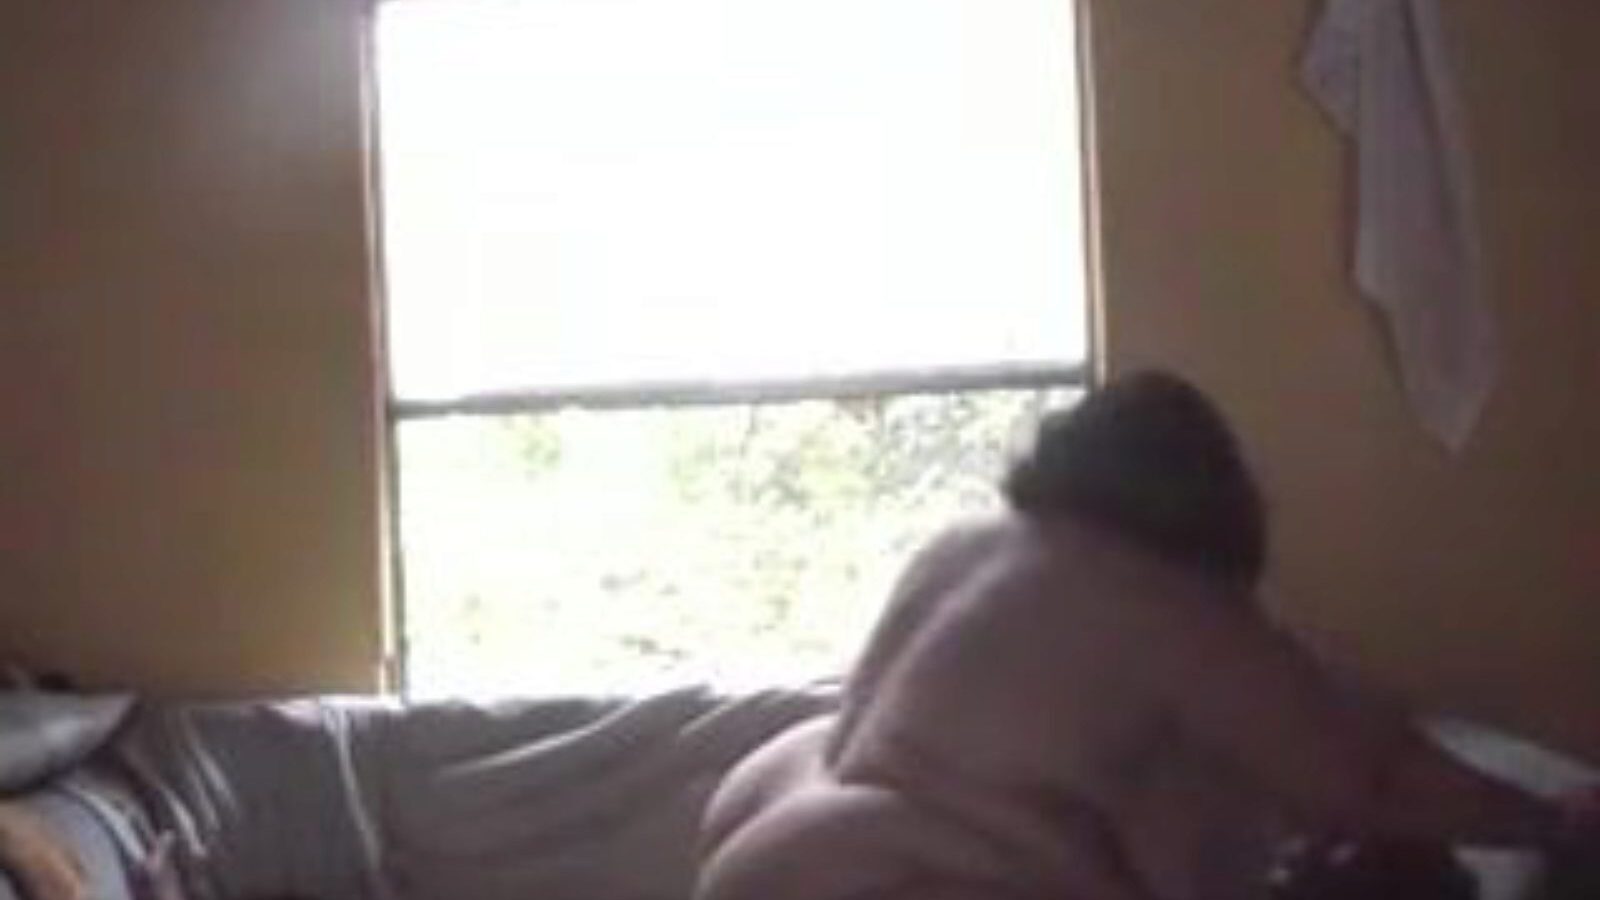 ssbbw bovenop zwarte man ، ssbbw dvd porn fa: xhamster watch ssbbw bovenop zwarte man clip on xhamster ، أفضل صفحة ويب على الإنترنت تحتوي على الكثير من حلقات ssbbw dvd chubby man & guy